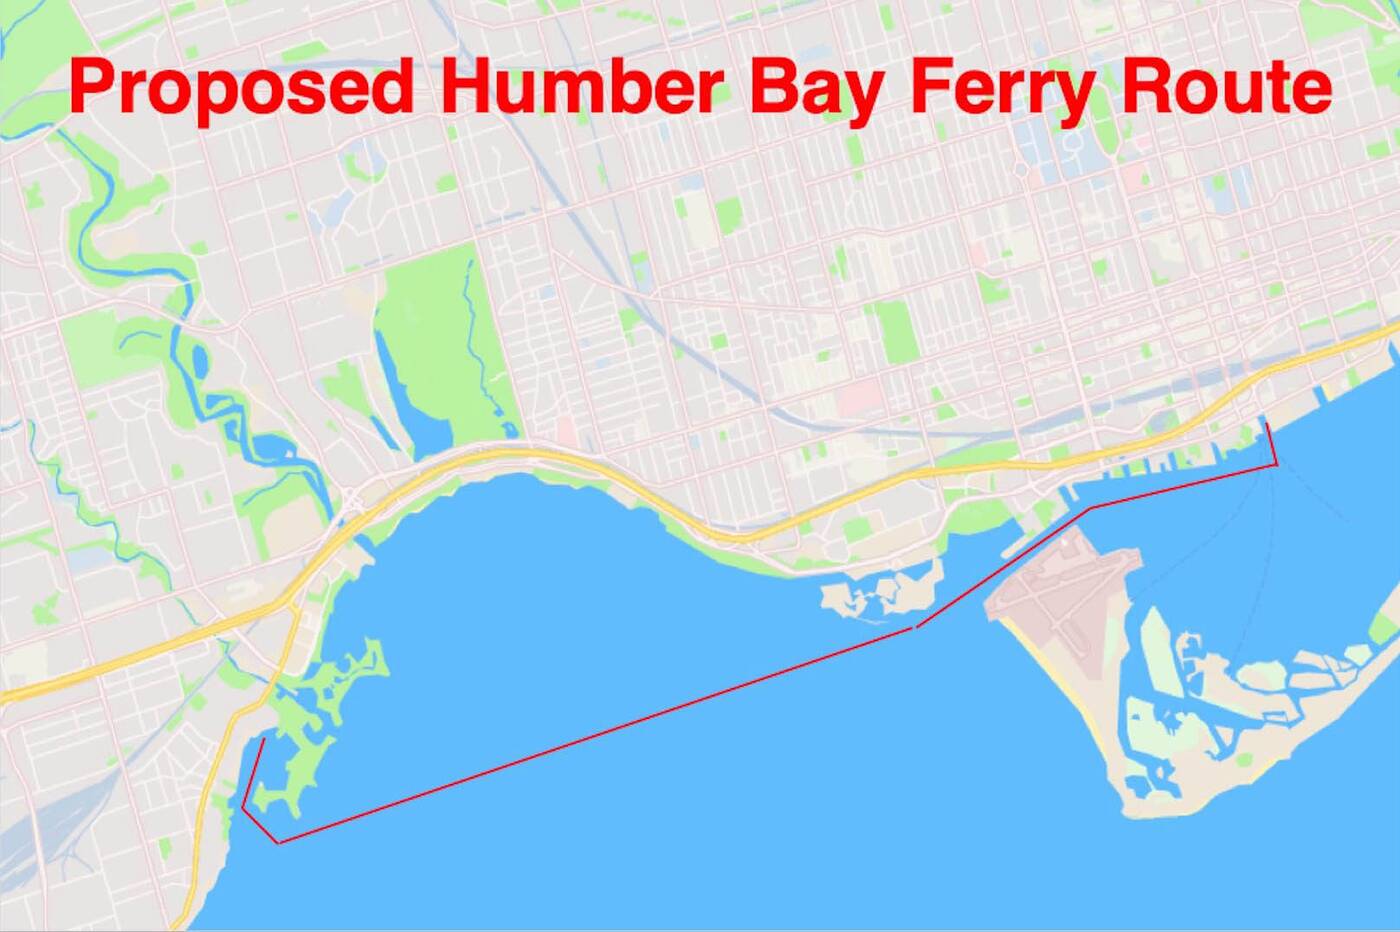 humber bay ferry